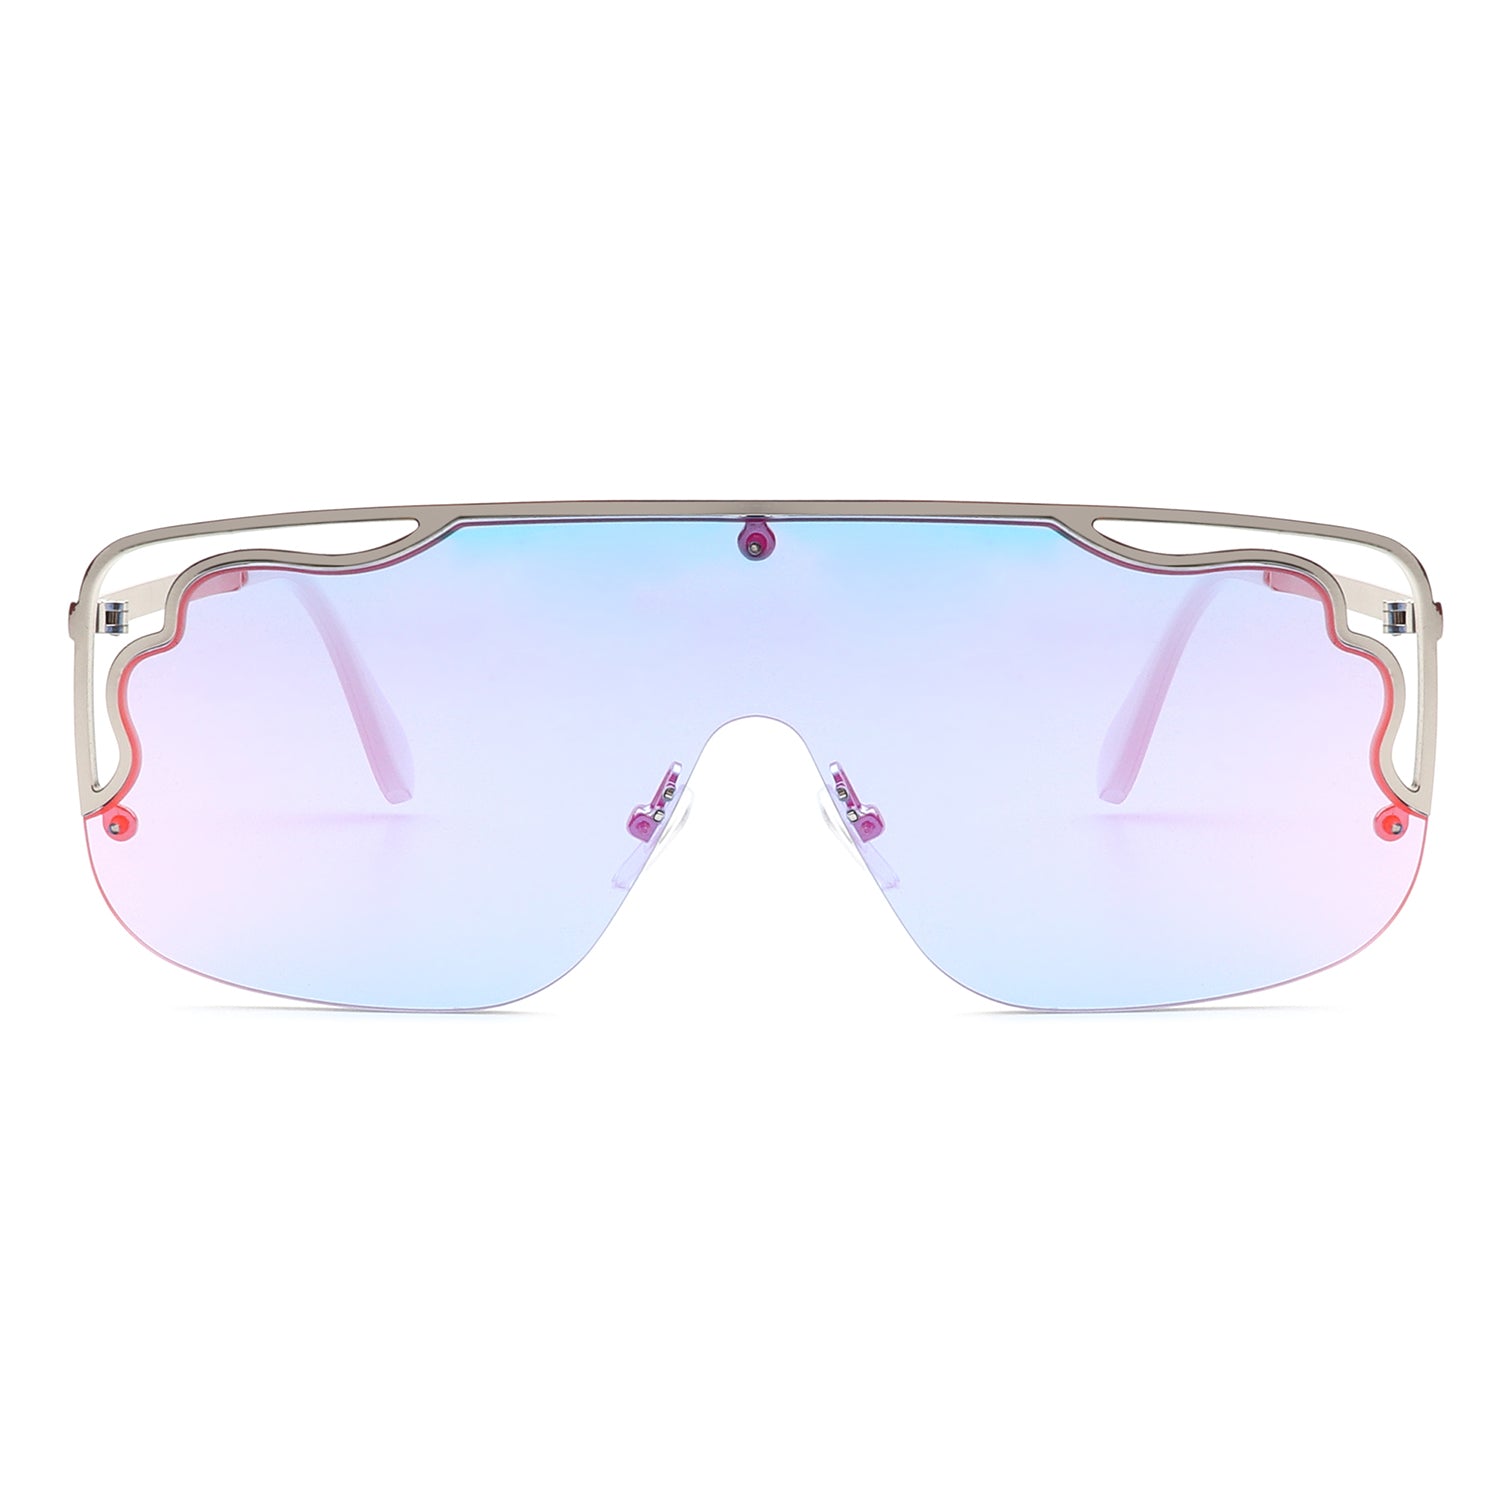 HJ3006 - Square Half Frame Aviator Designer Fashion Sunglasses